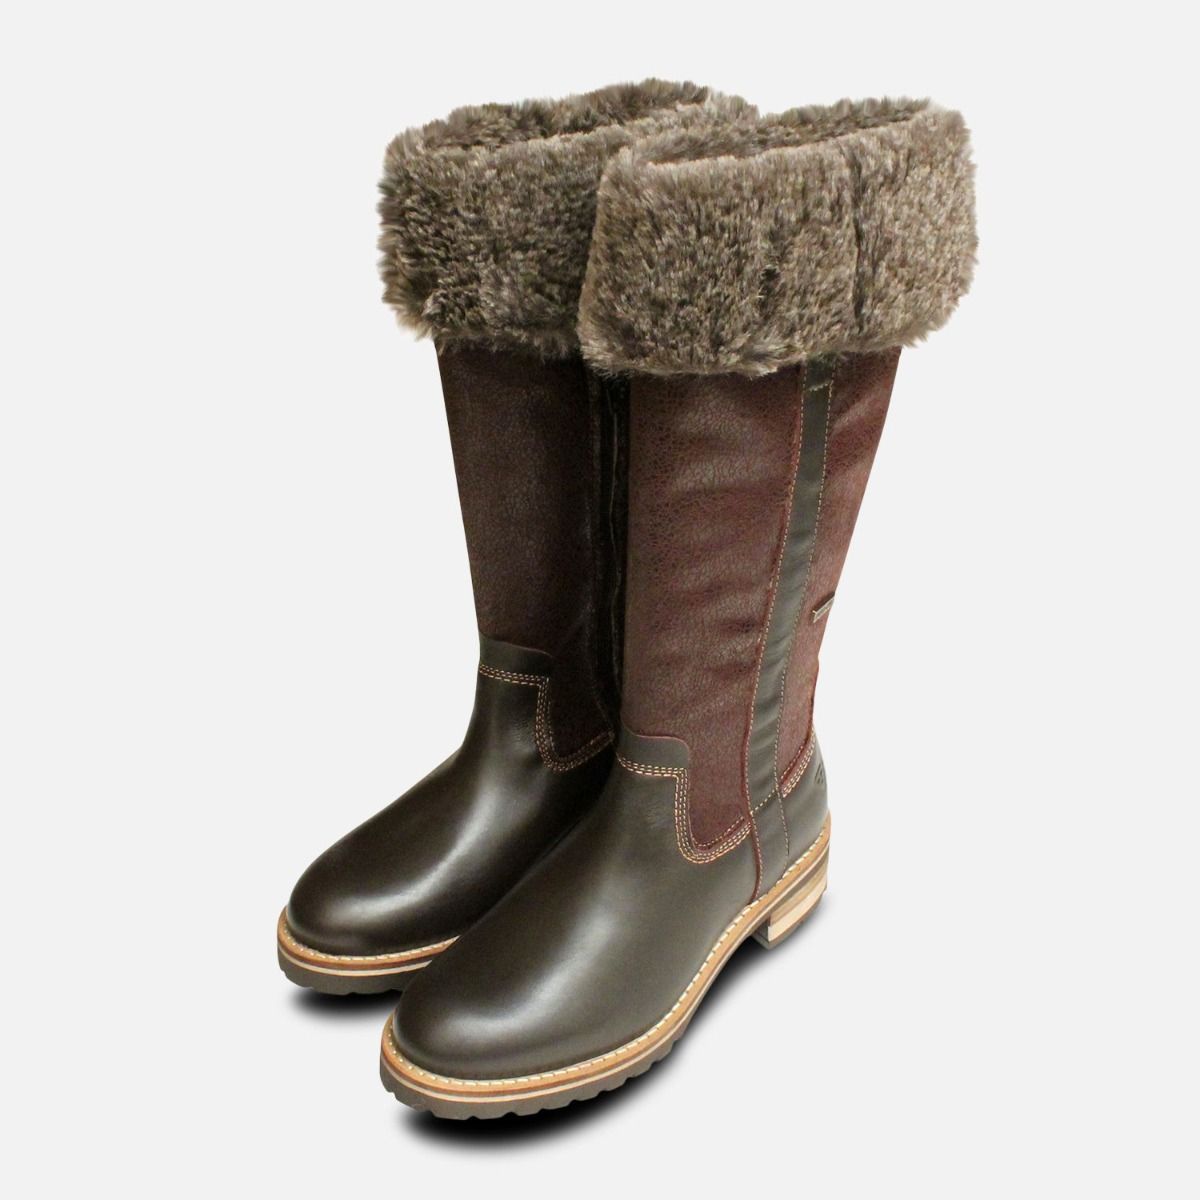 Warm Fur Lined Tamaris Long Boots in Brown Duo Tex